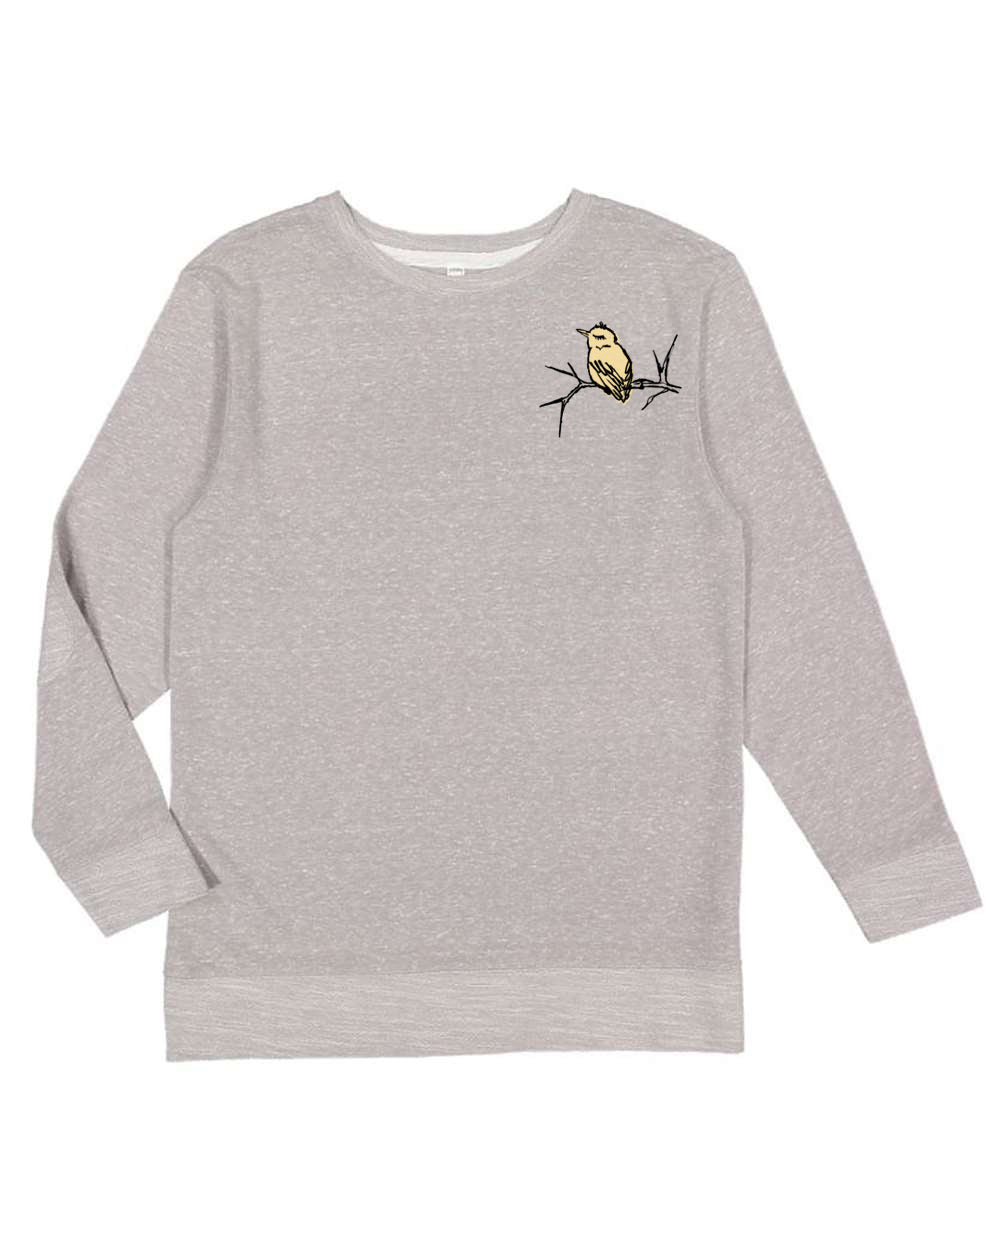 Small Sparrow : Unisex Melange Sweatshirt